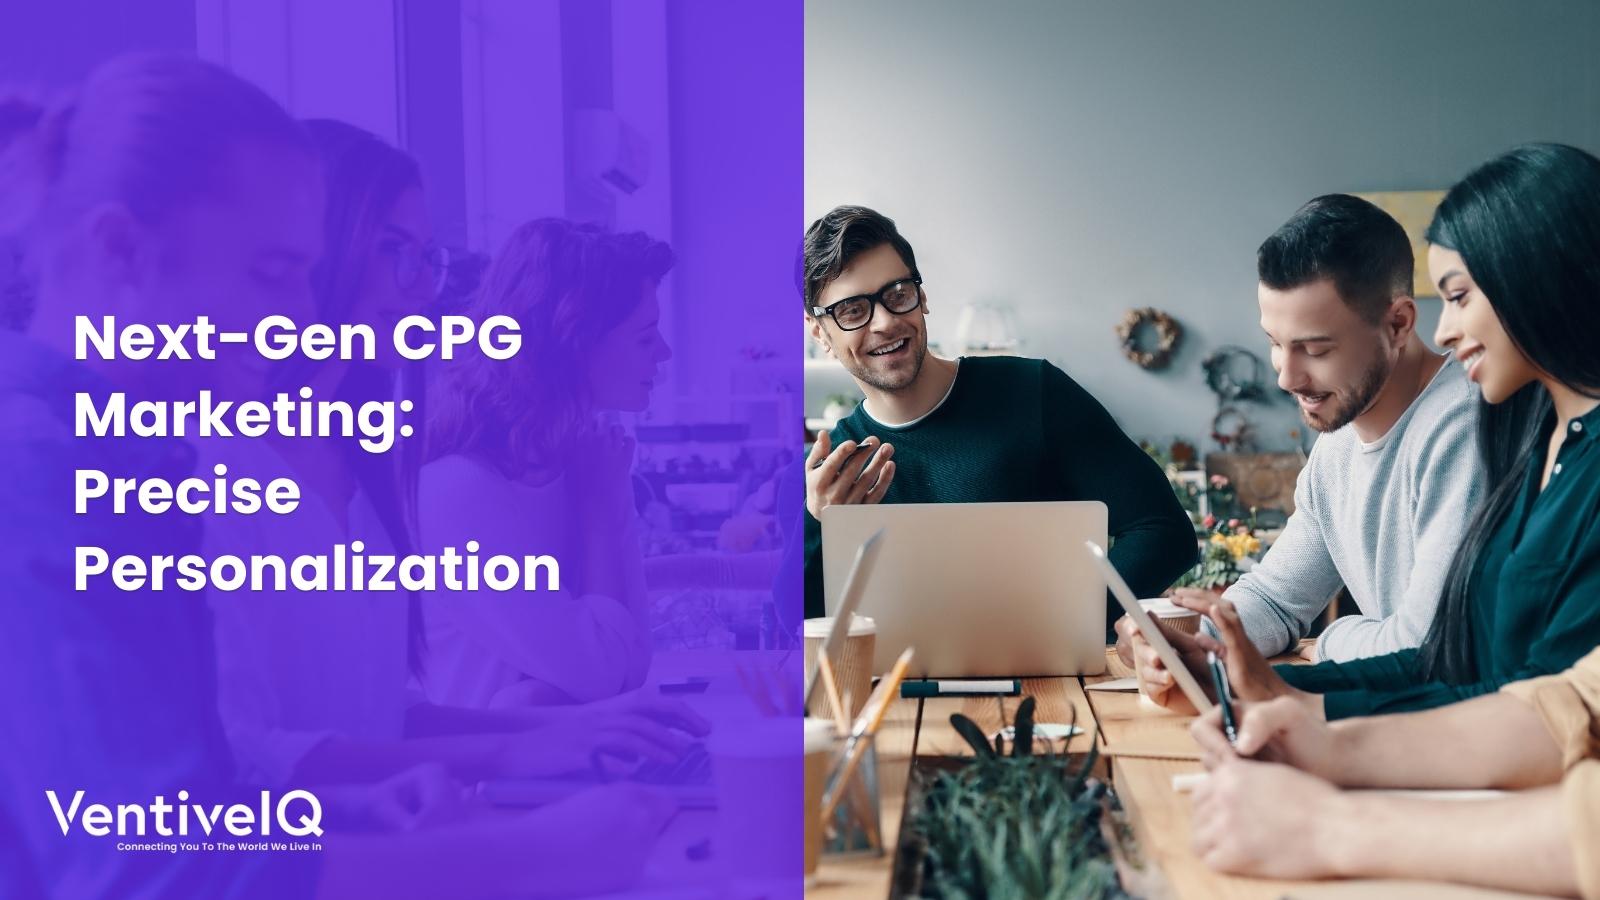 Next-Gen CPG Marketing: Precise Personalization